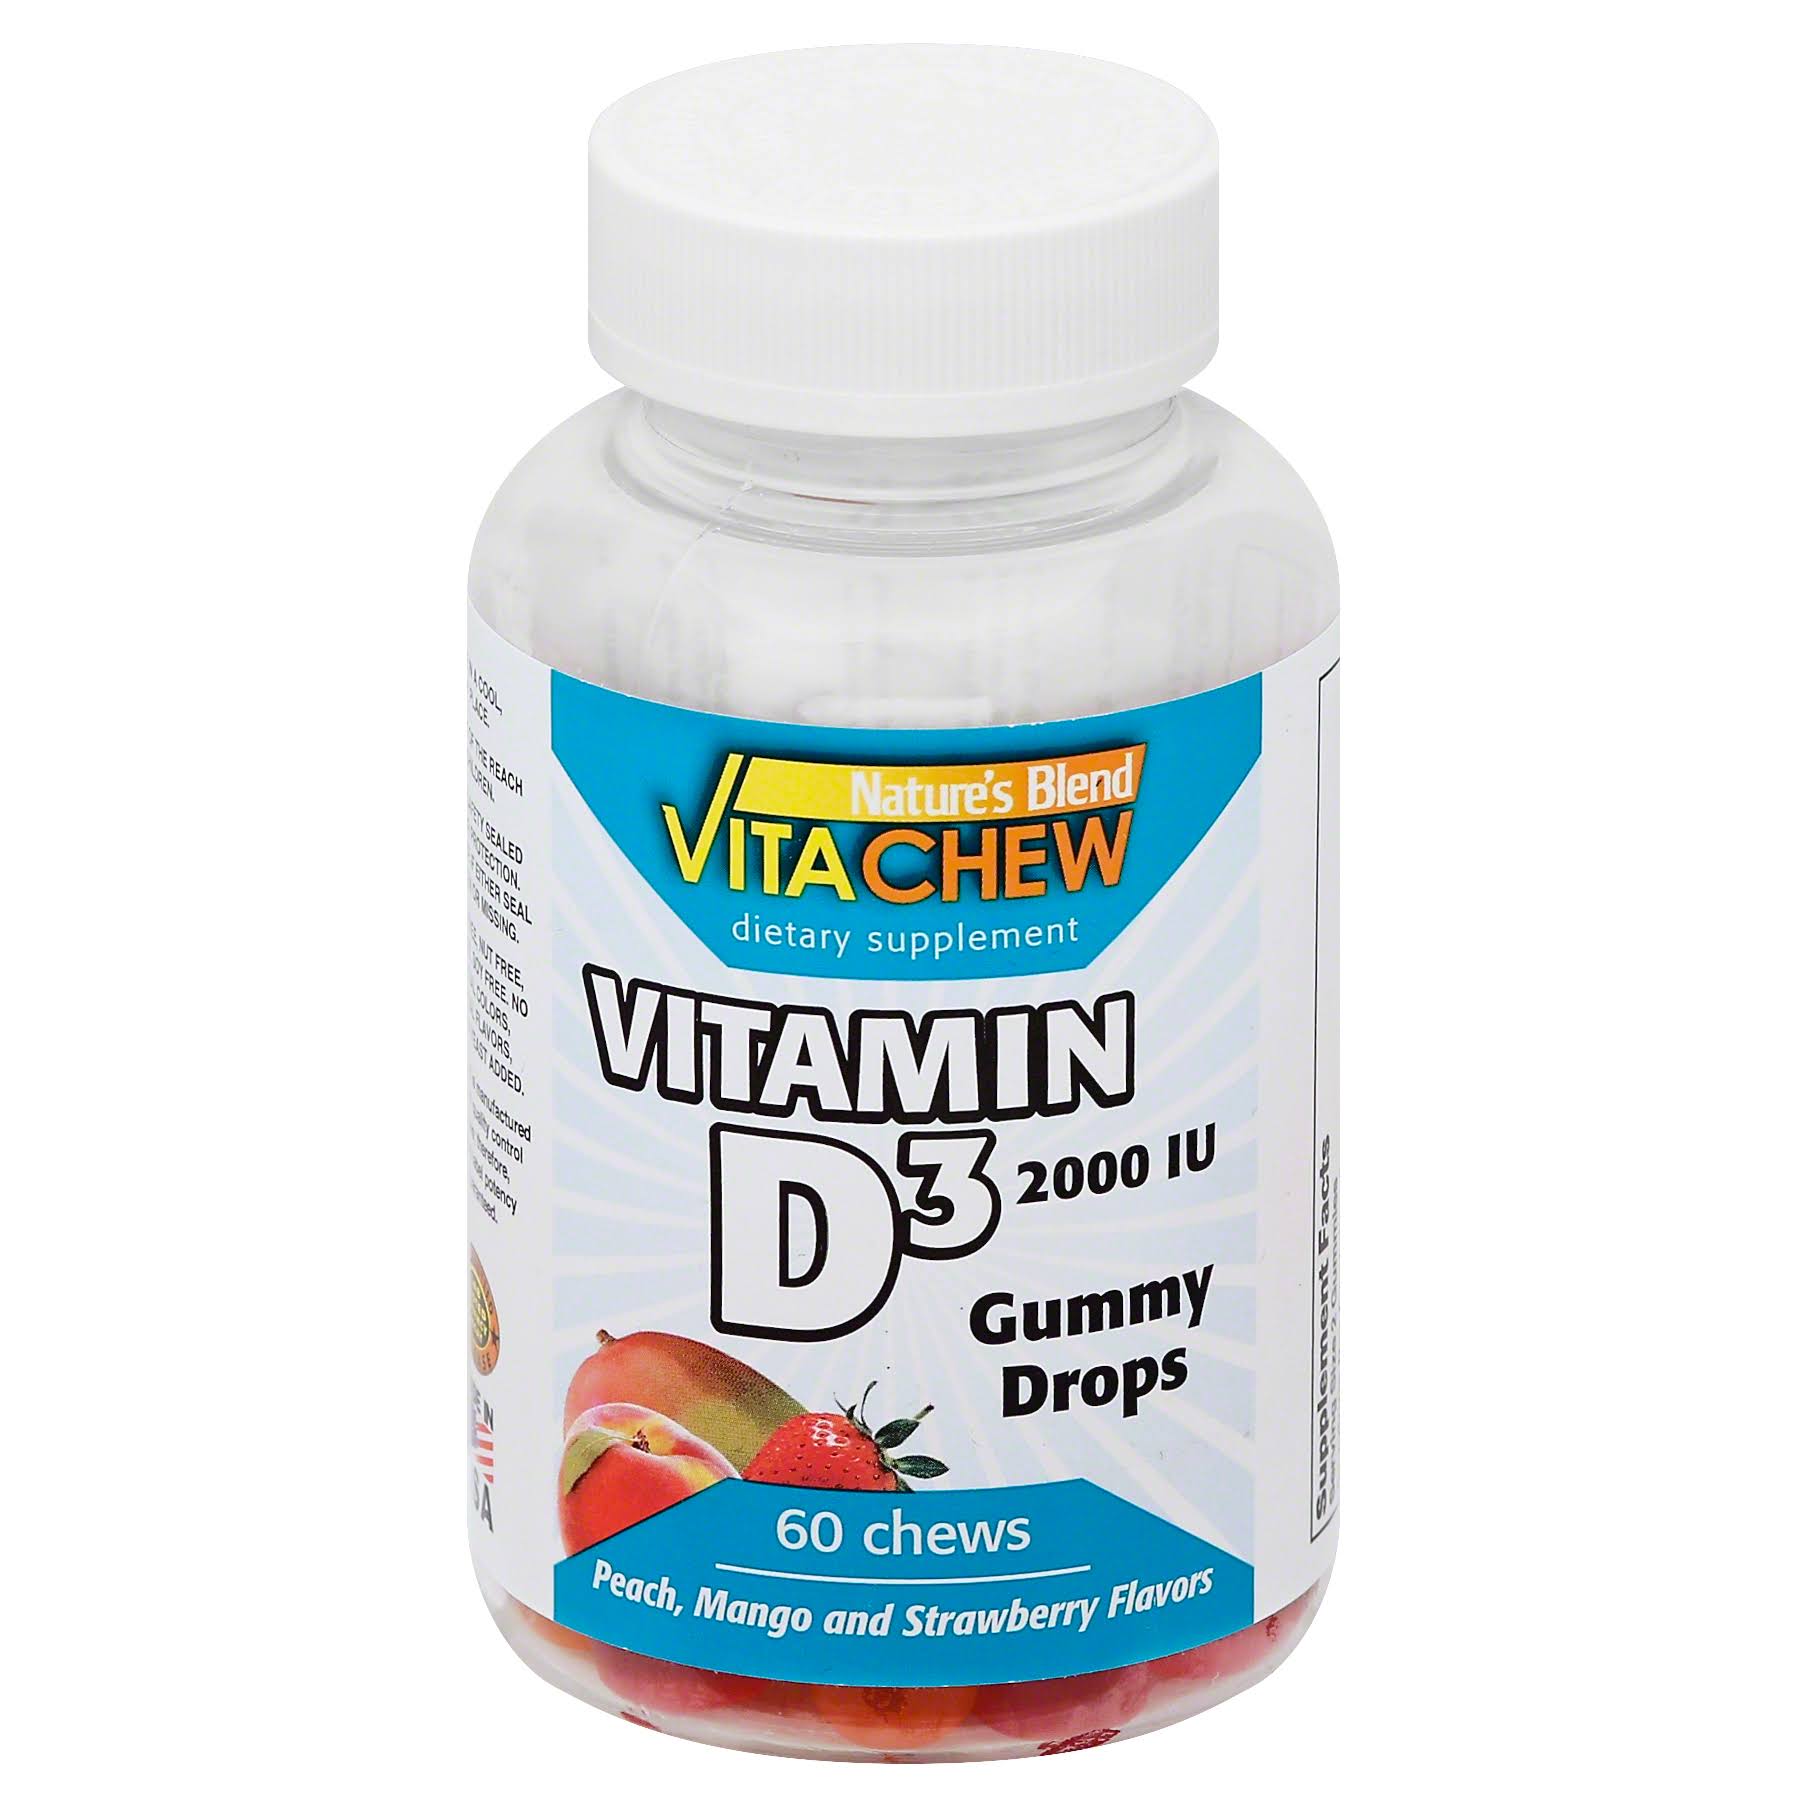 Natures Blend Vita Chew Vitamin D3, Gummy Drops - 60 chews